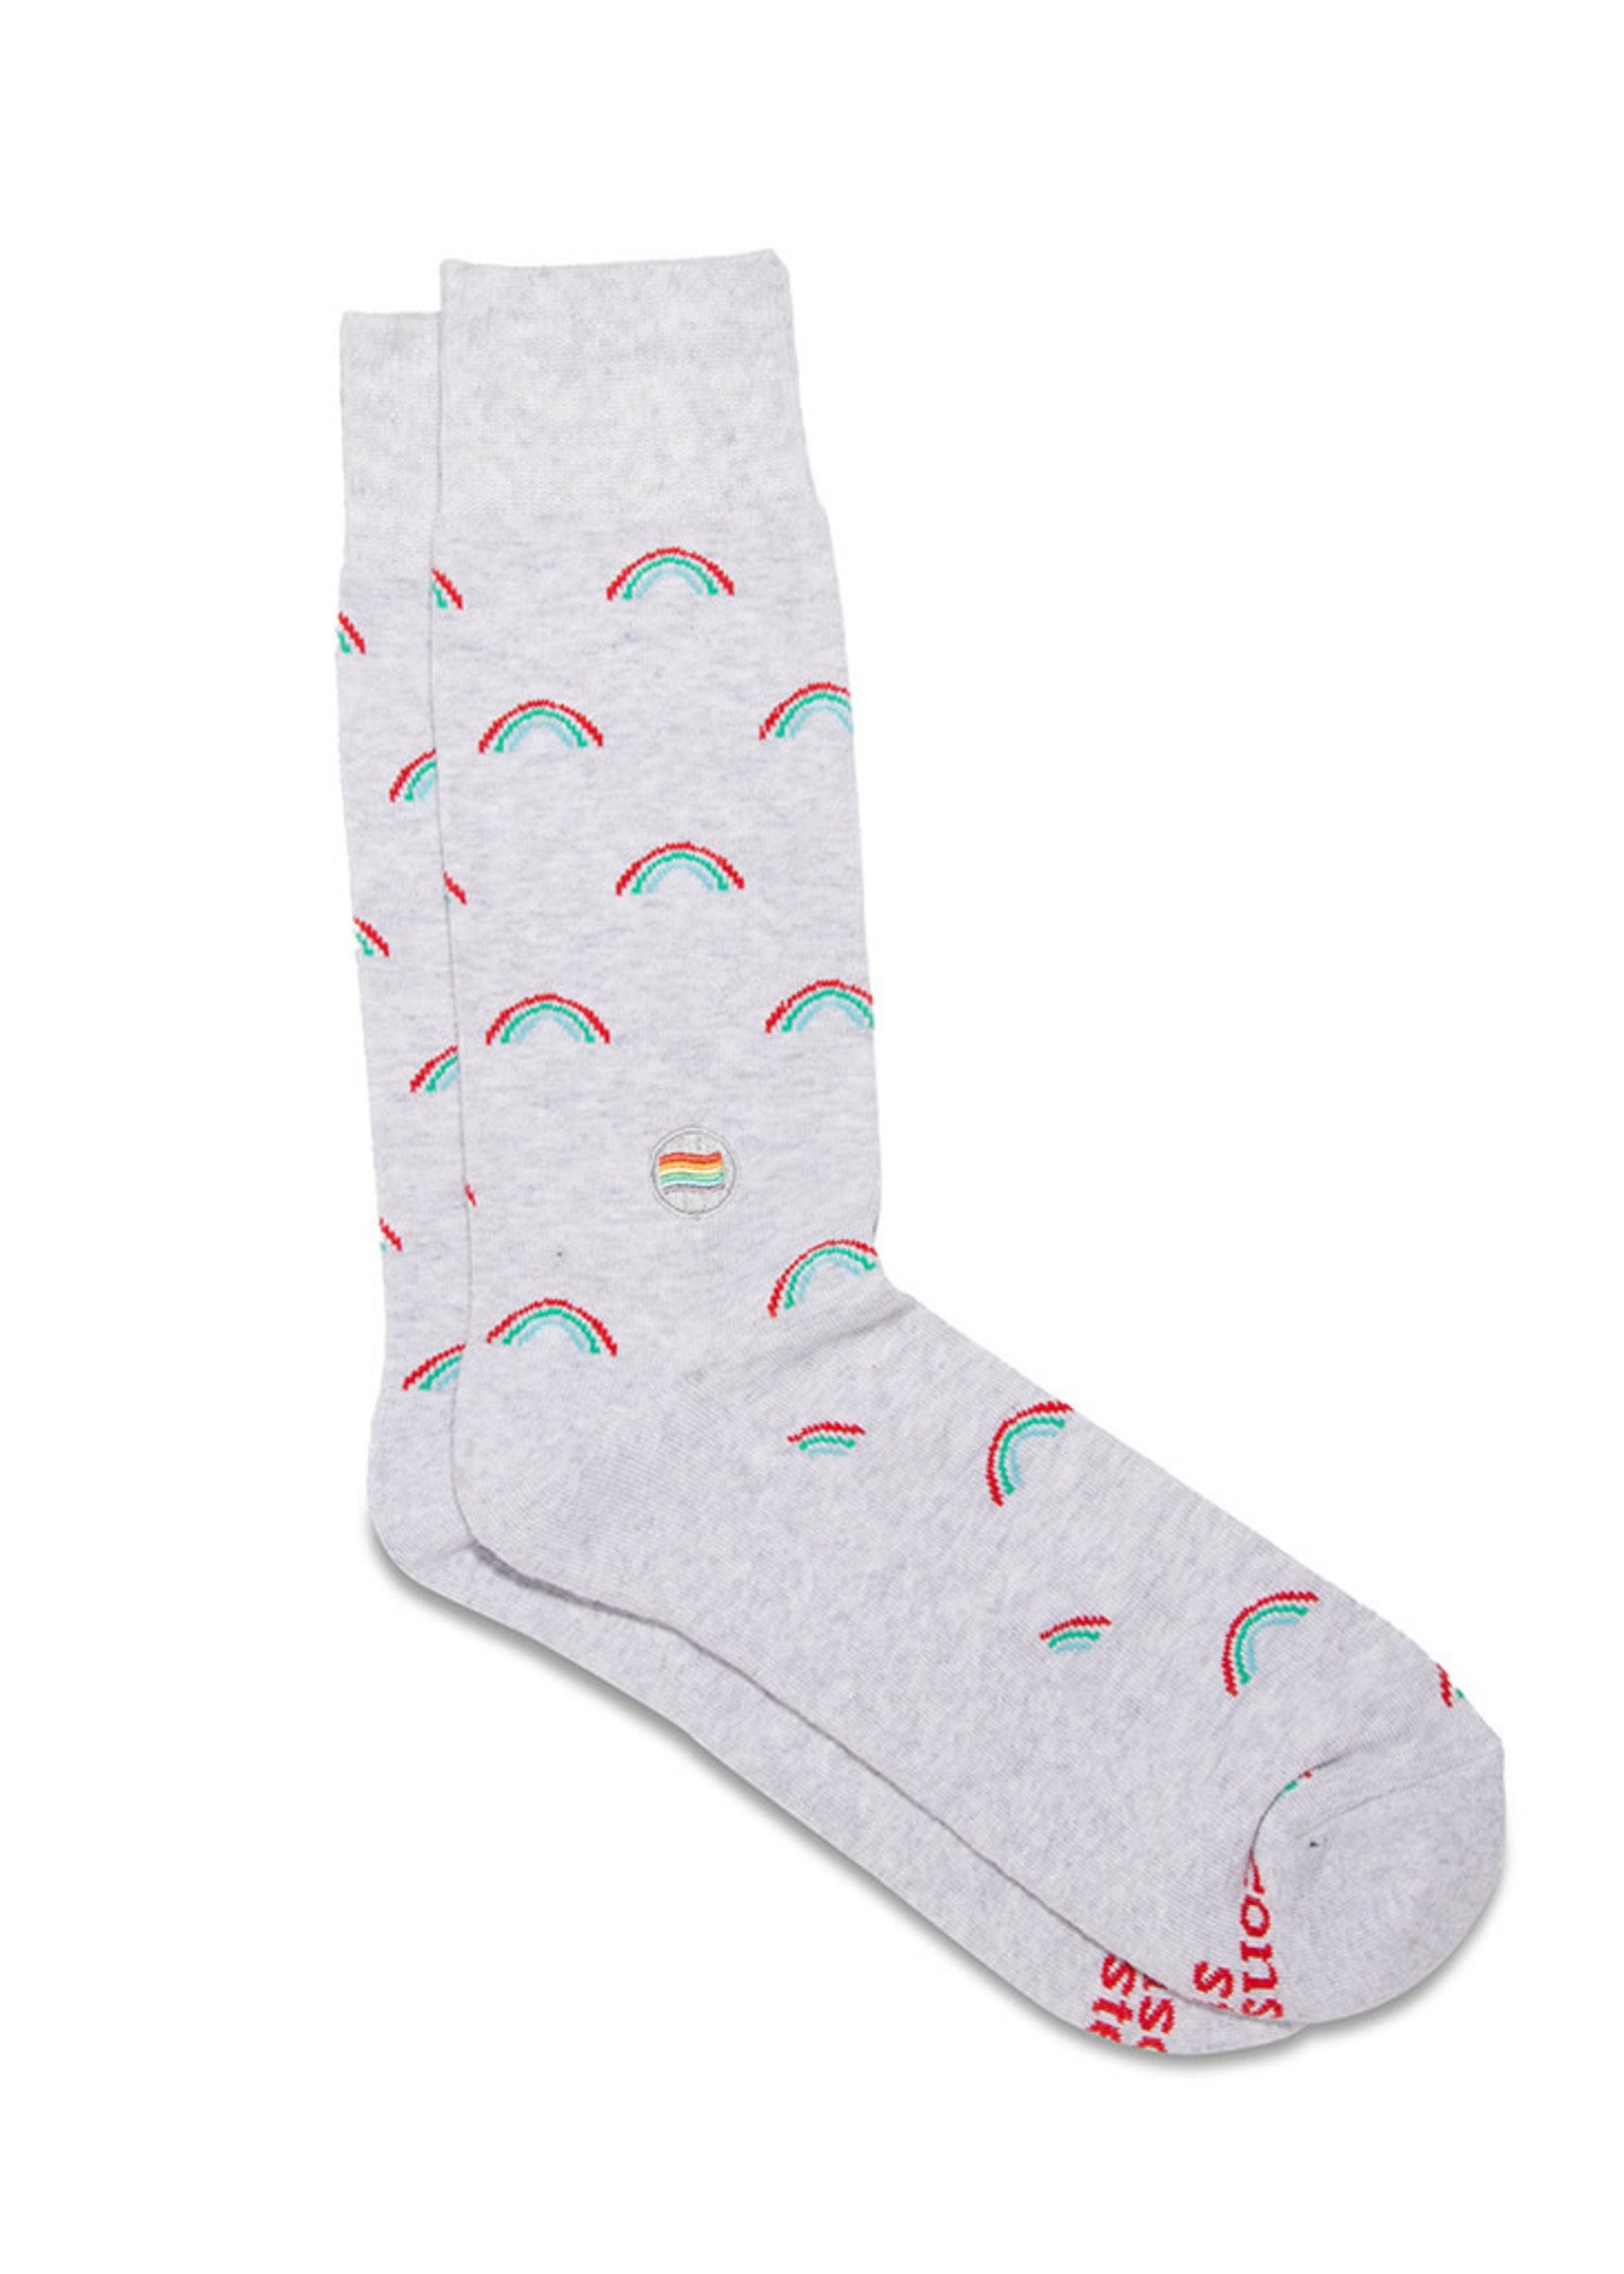 Conscious Step Men's Socks - LGBTQ Rainbows